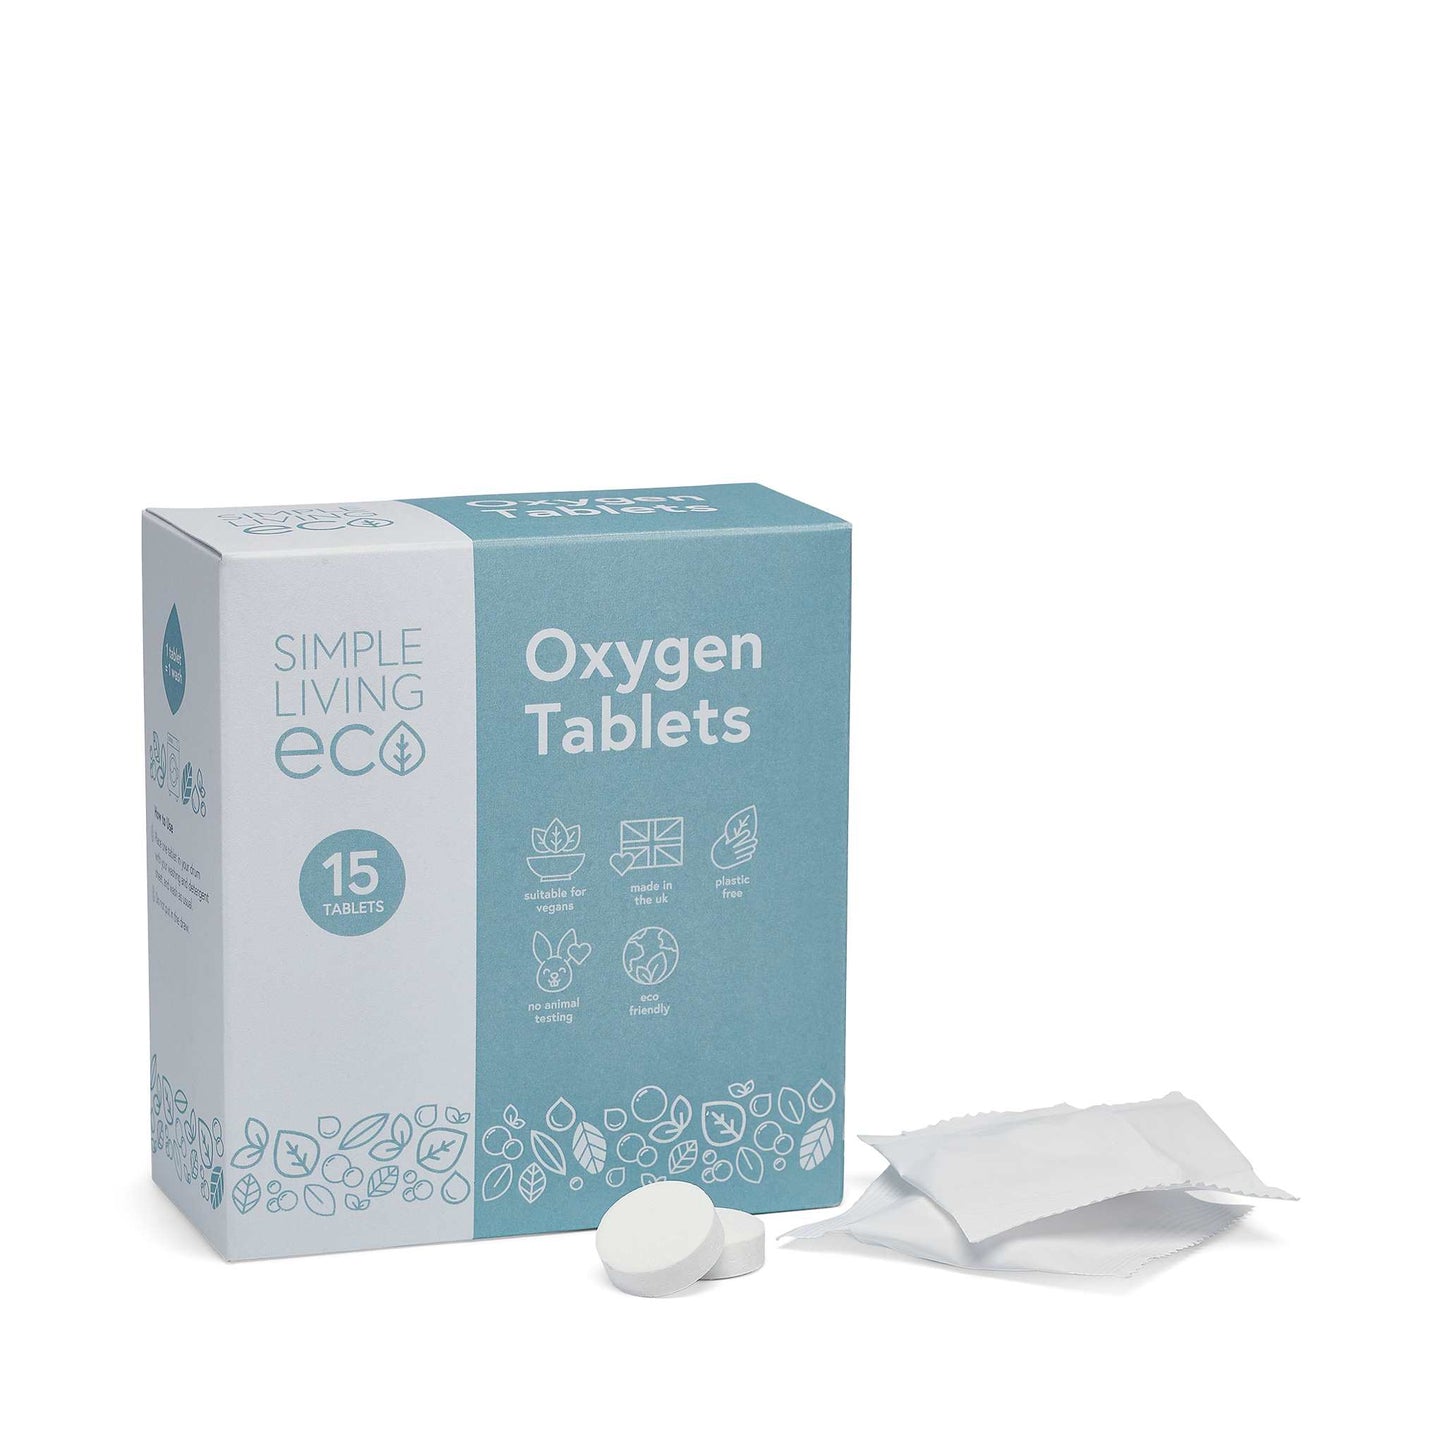 Simple Living Eco Laundry Oxygen Whitening Laundry Tablets – Pack 15 - Simple Living Eco